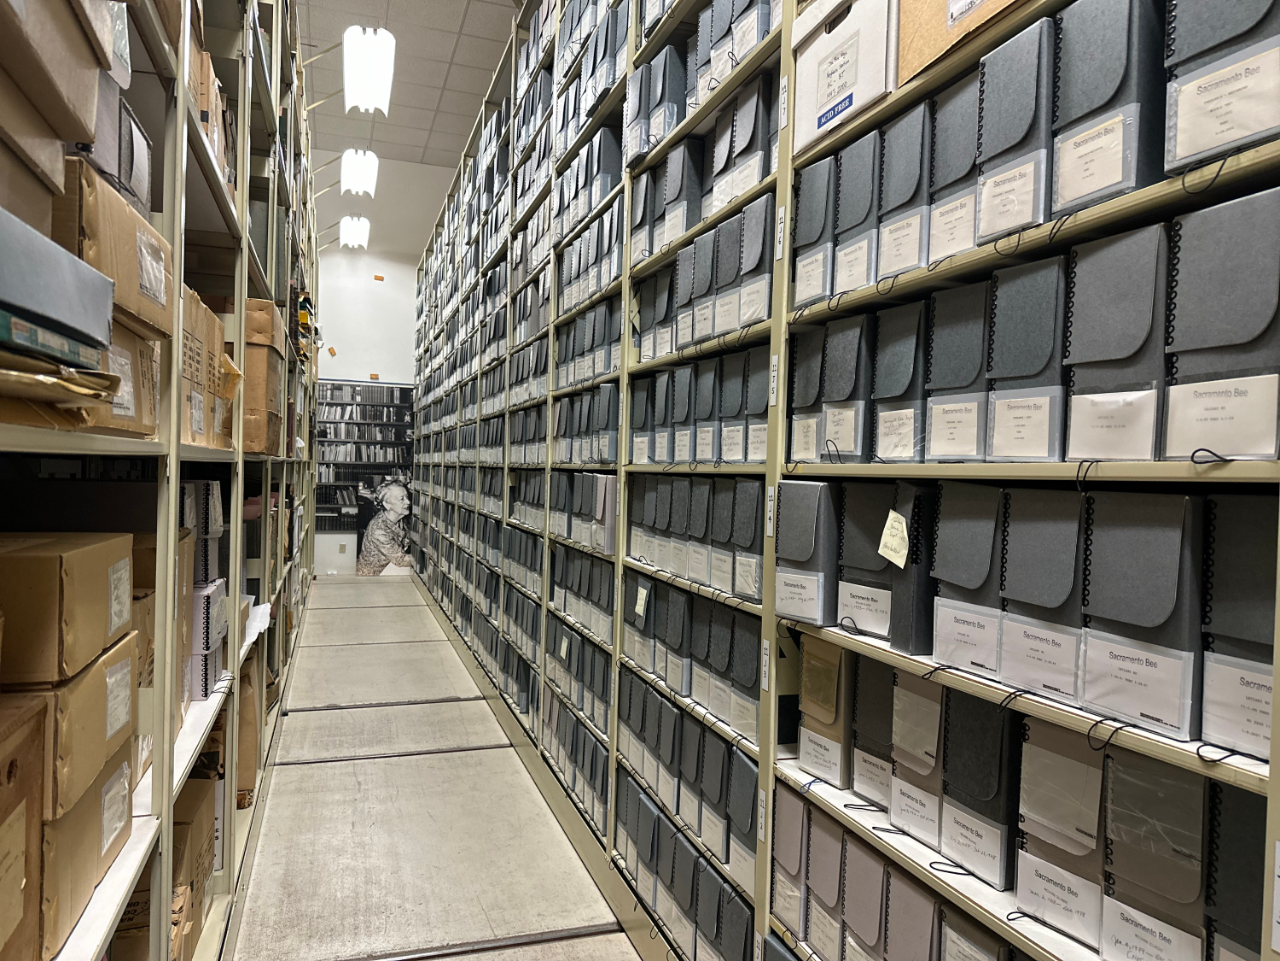 Collection vault aisle showing archival boxes